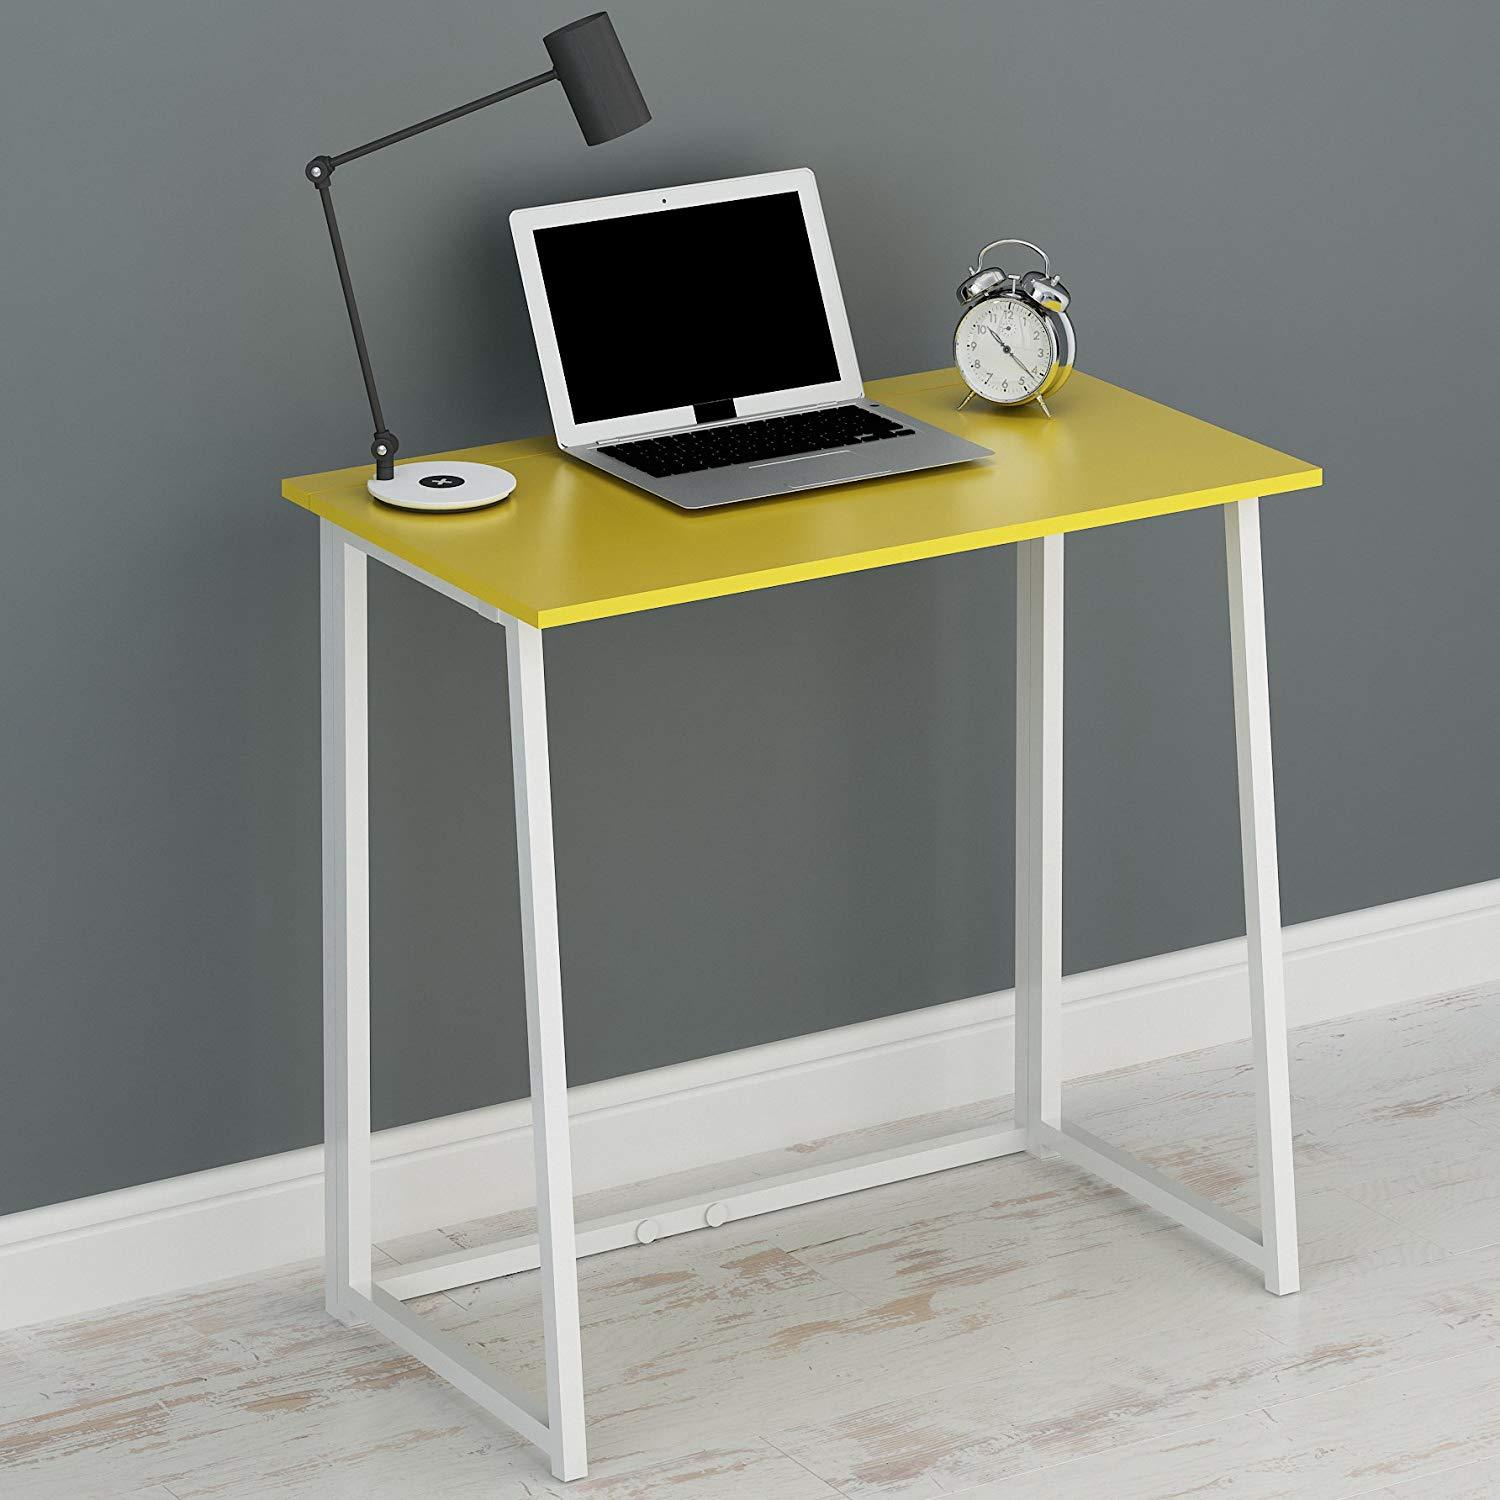 Compact Flip-Flop Folding Computer Desk Home Office Laptop Desktop Table, Yellow